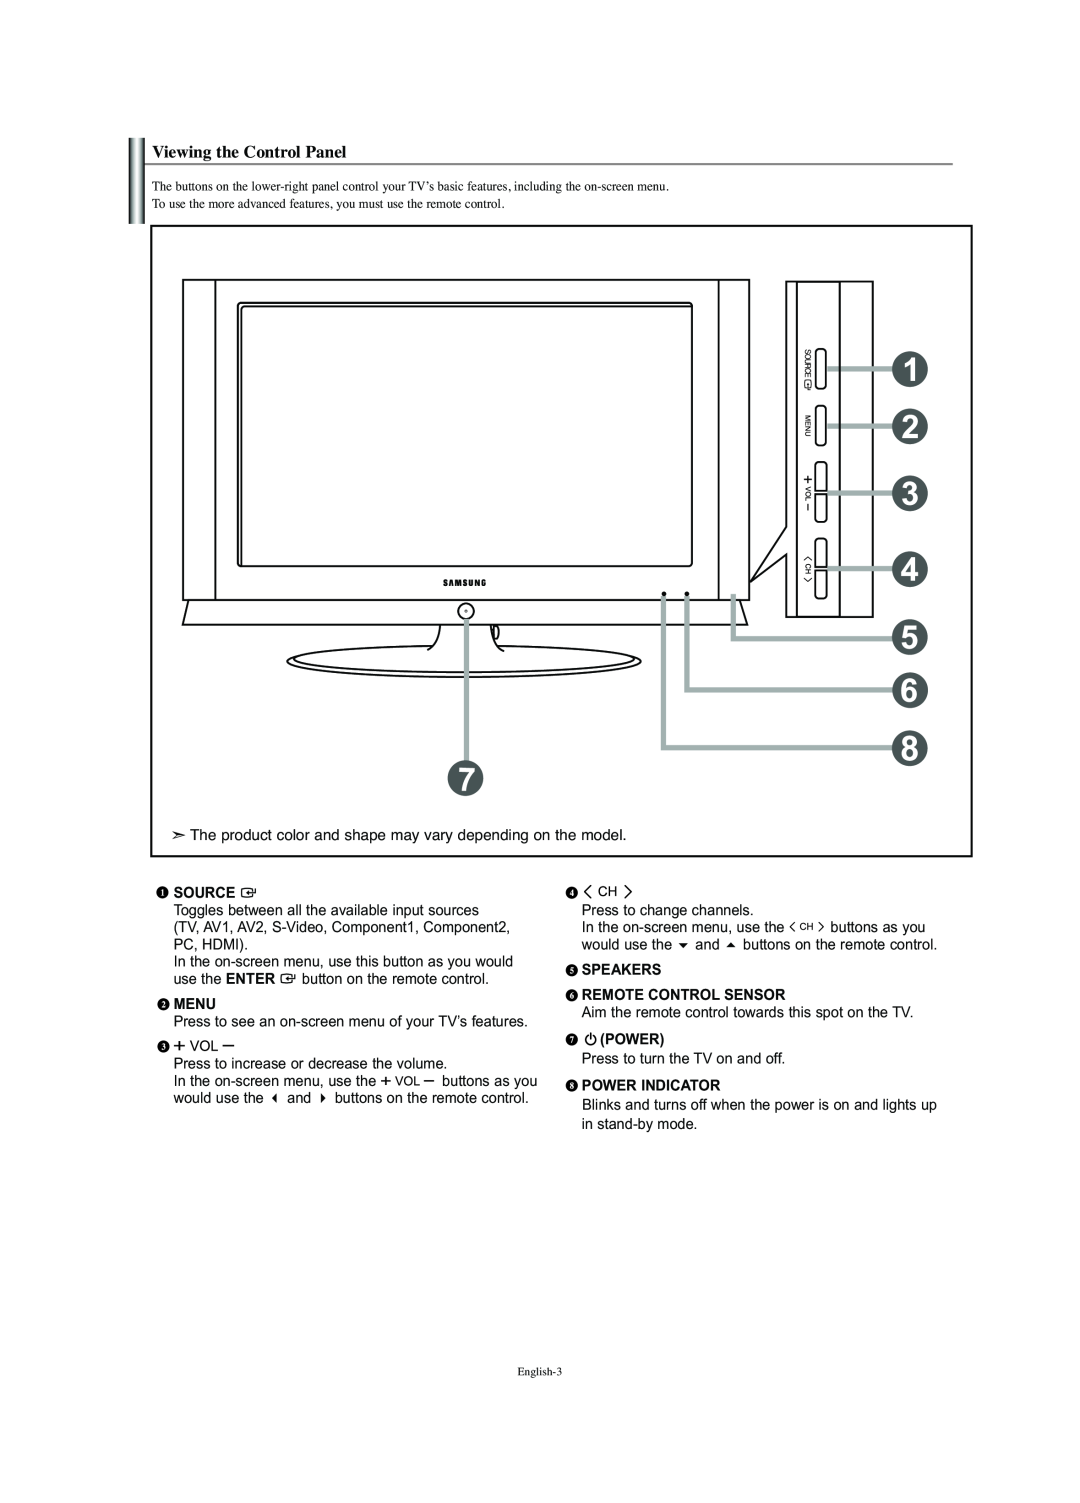 Samsung LN-S2341W manual Viewing the Control Panel, Source, Menu, Speakers Remote Control Sensor, Power Indicator 